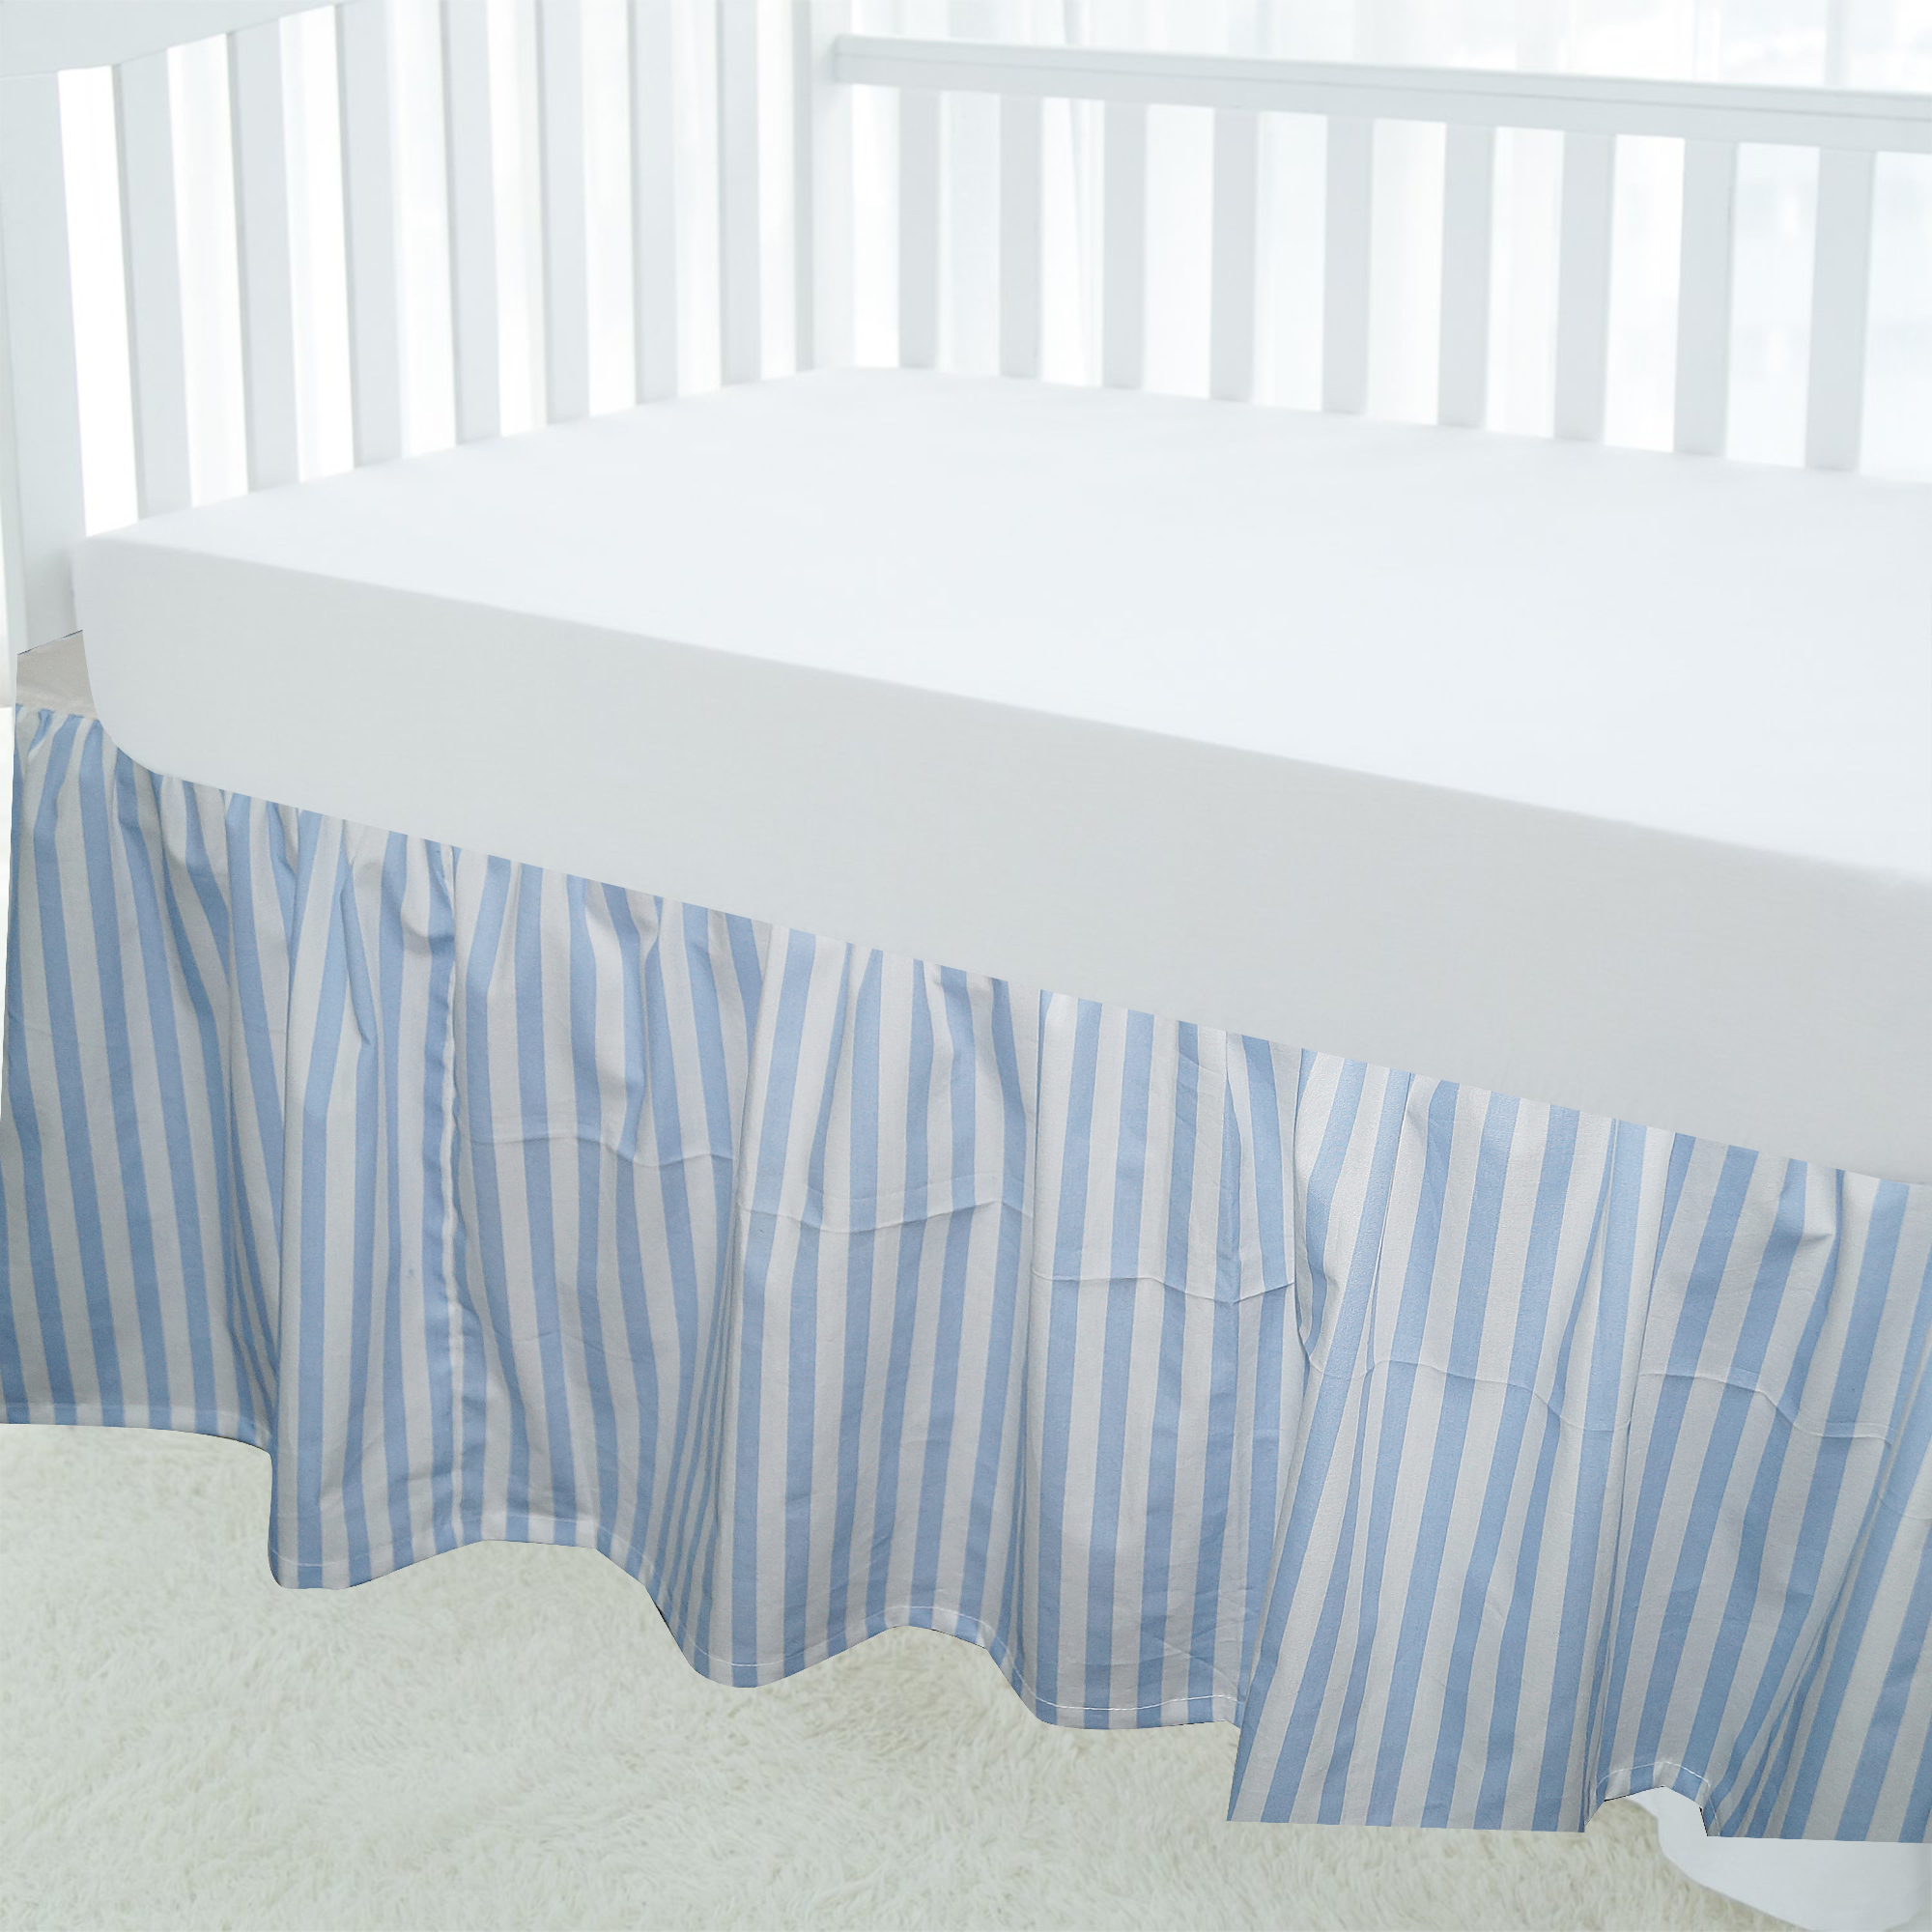 Striped Crib Skirt 100% Natural Cotton Nursery Crib Bedding Skirt